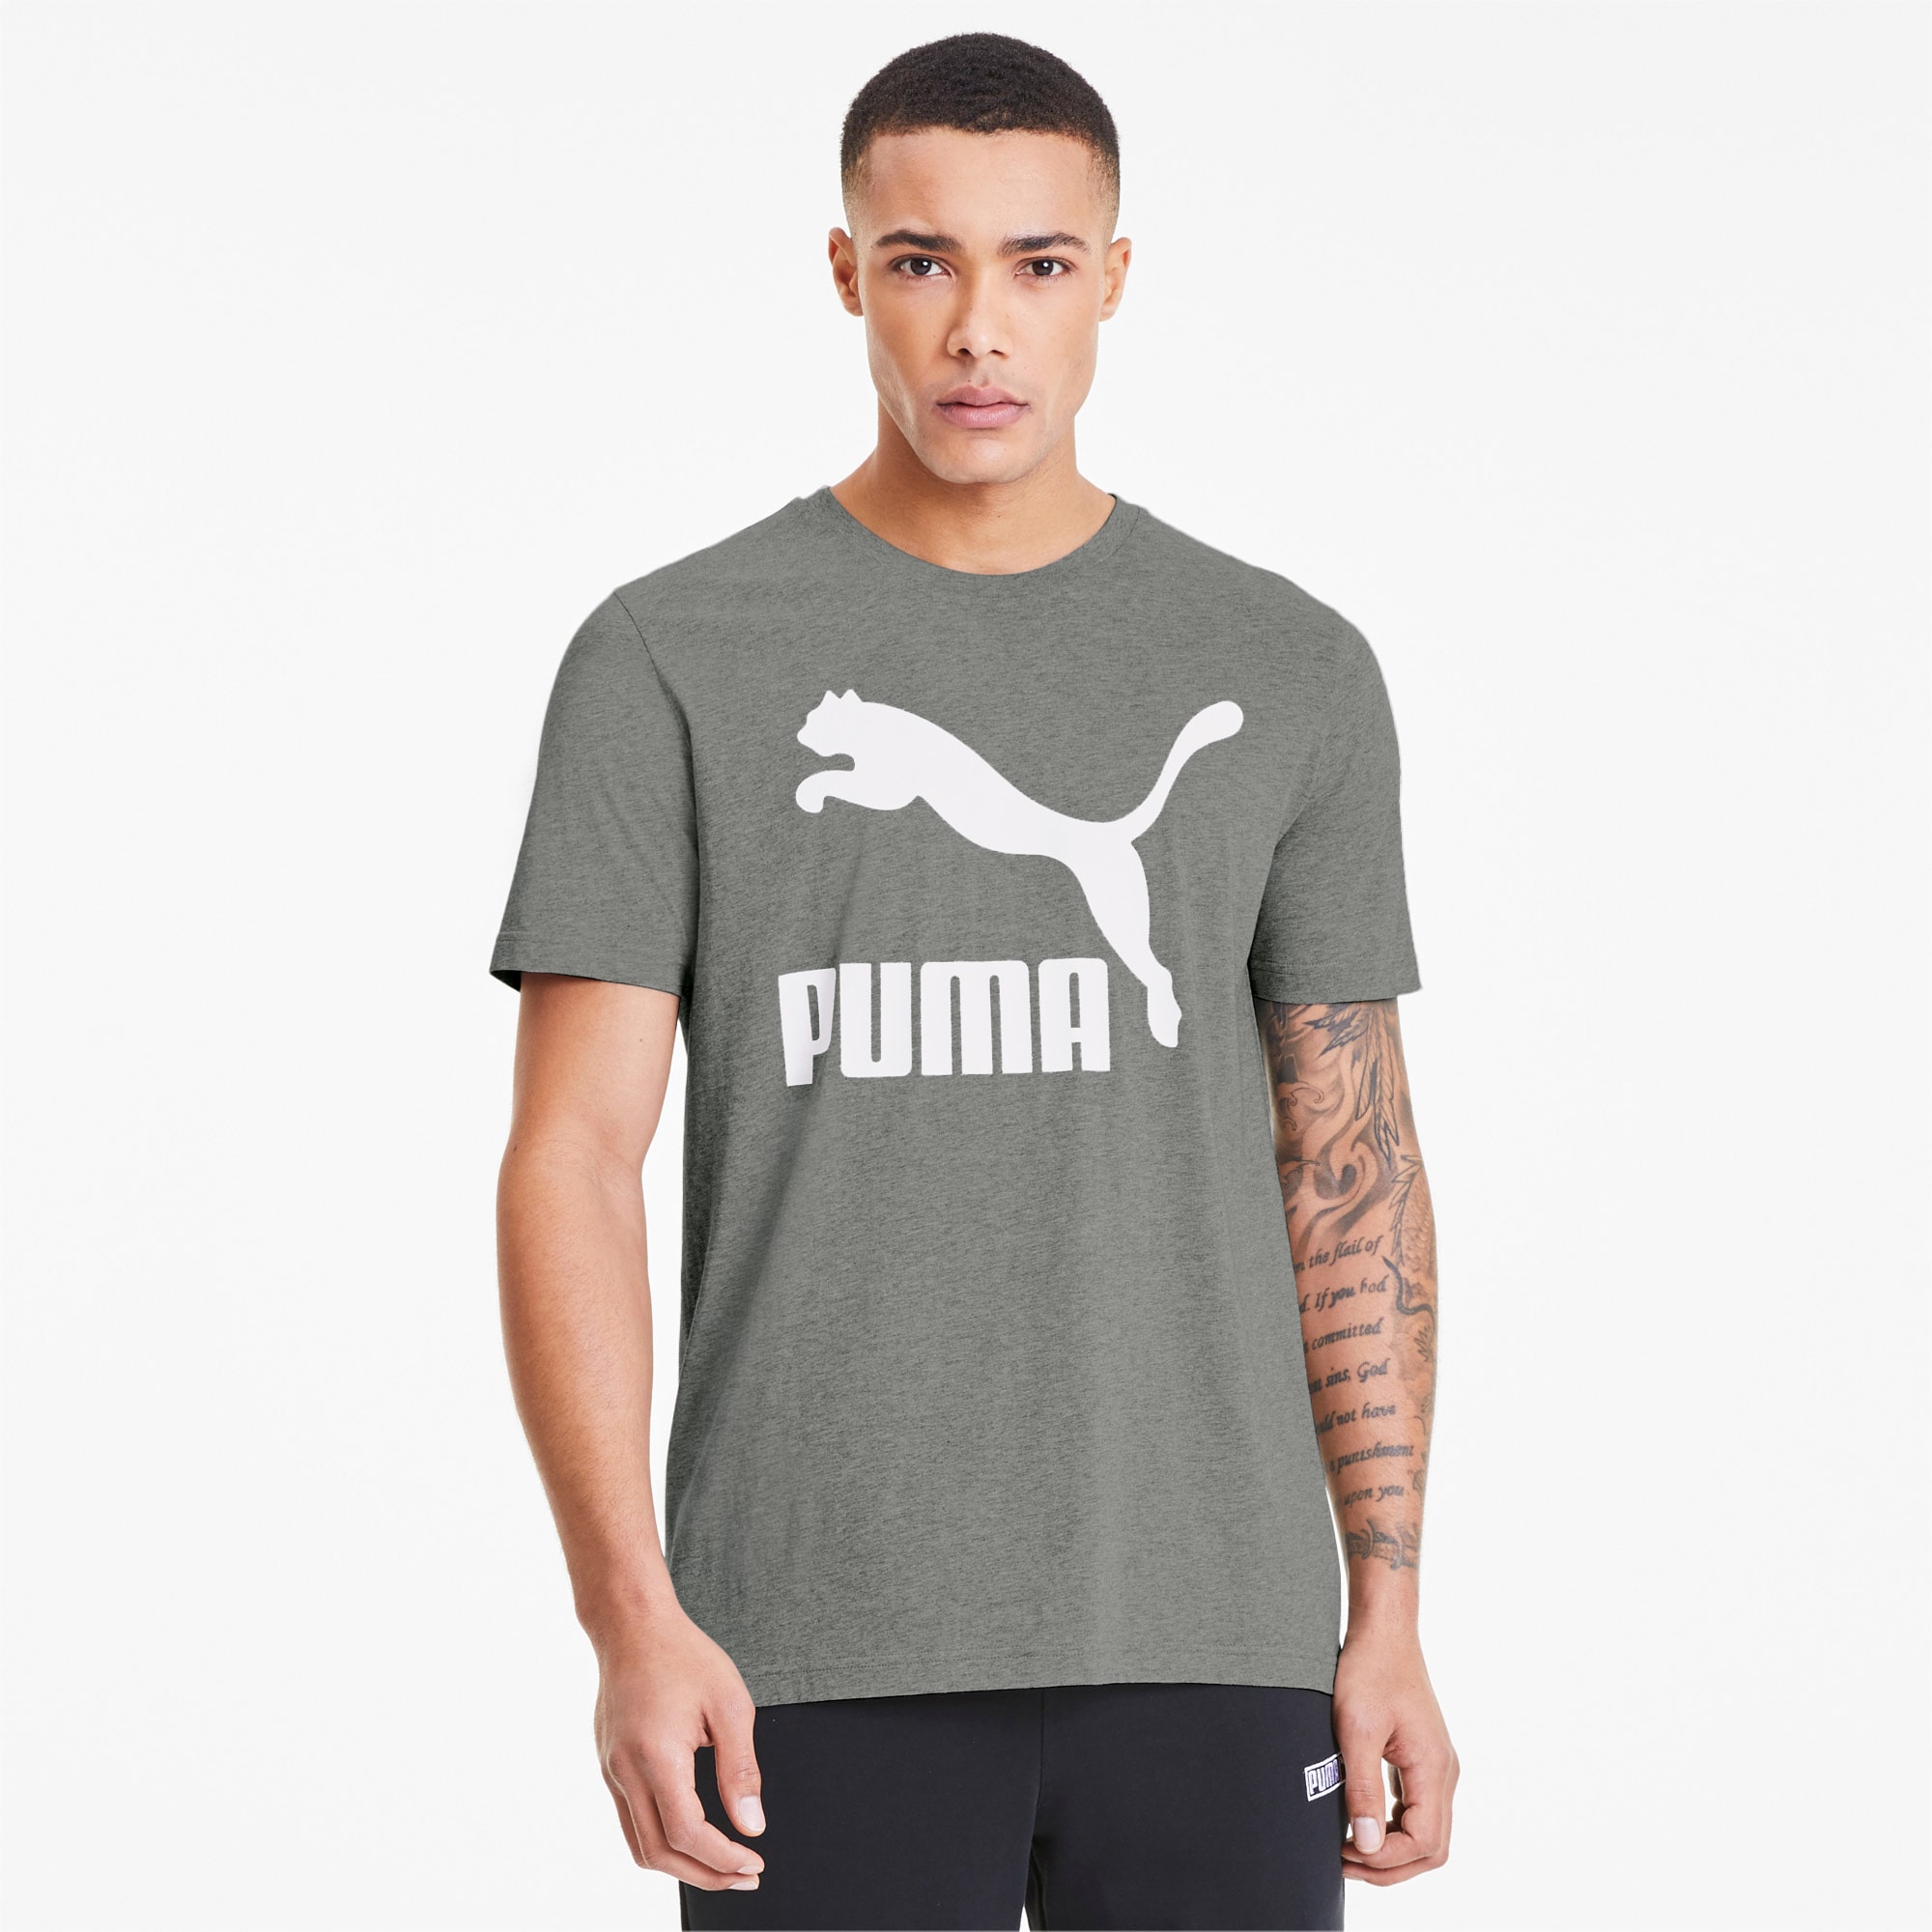 where is puma clothing made